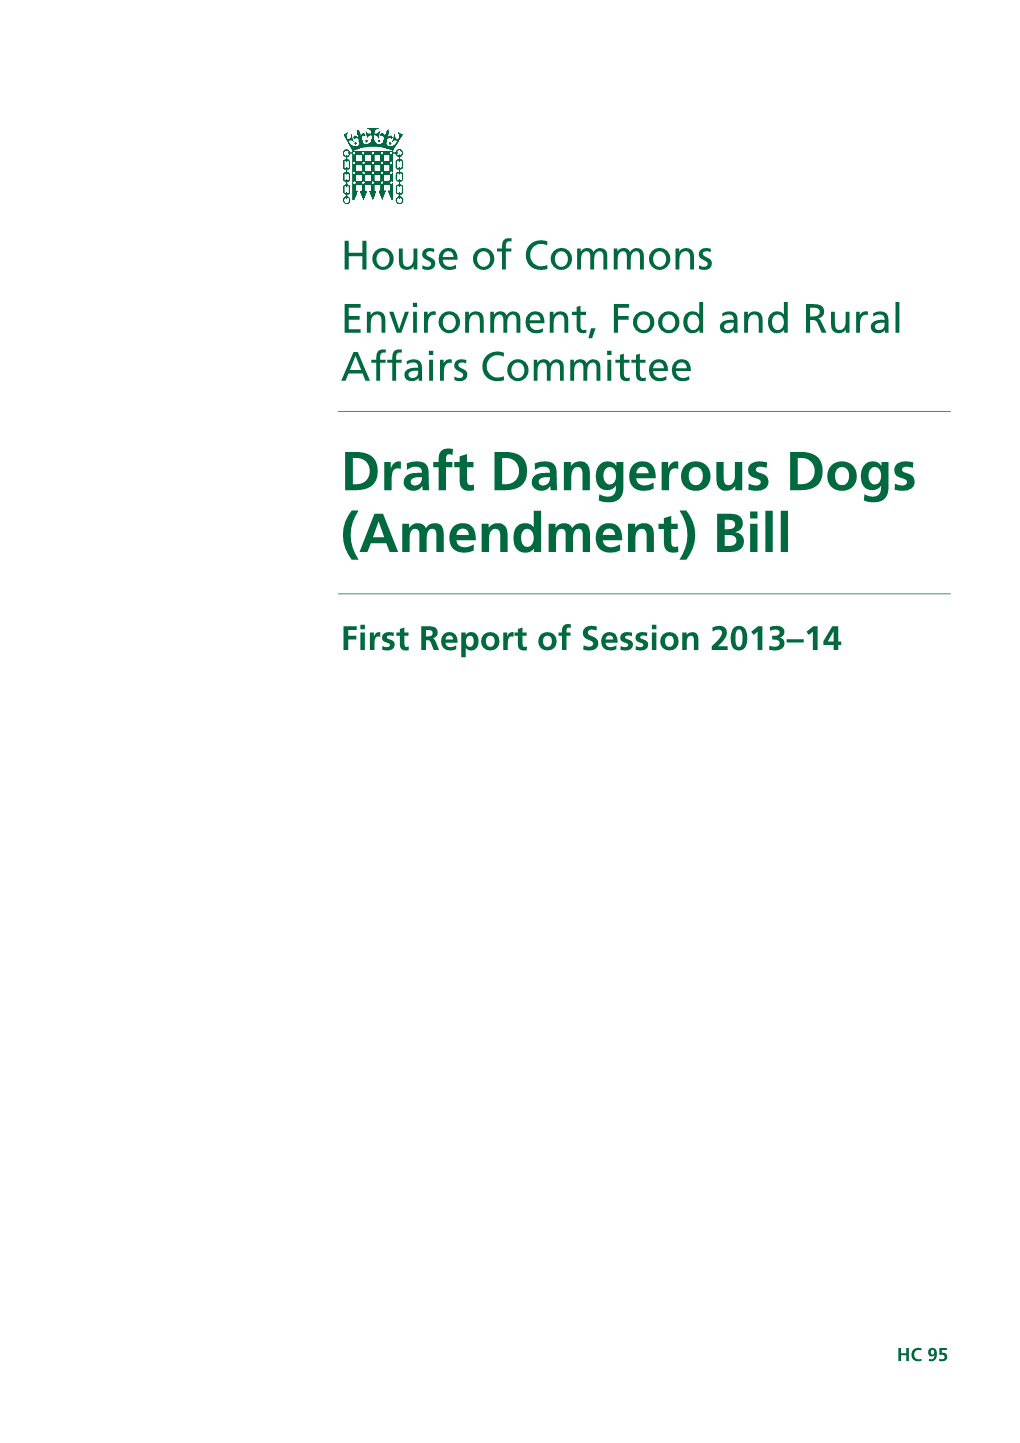 Draft Dangerous Dogs (Amendment) Bill